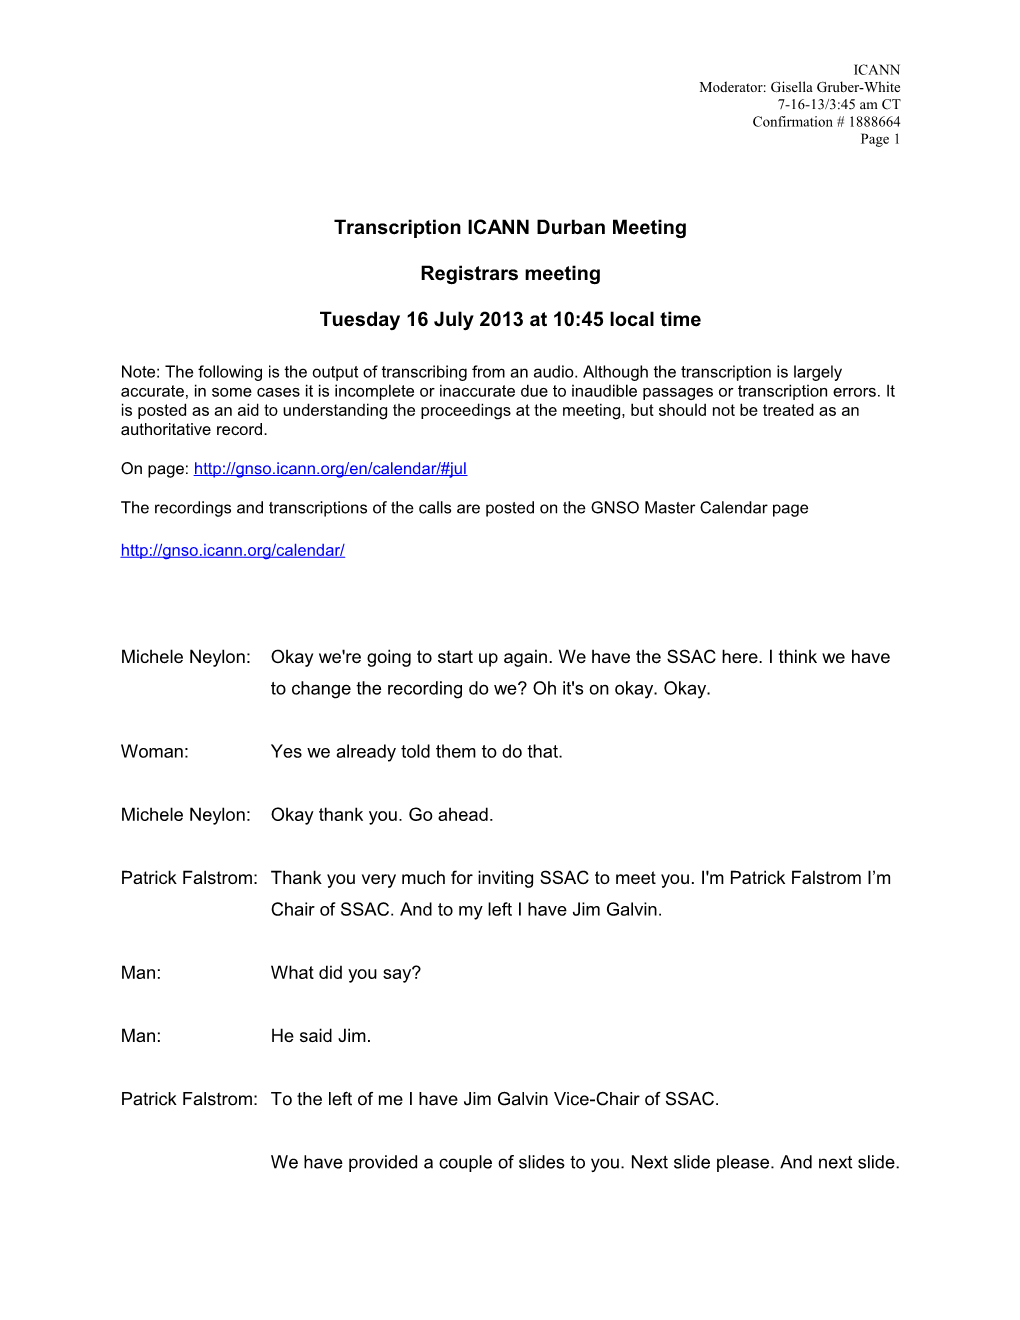 Transcription ICANN Durban Meeting s1